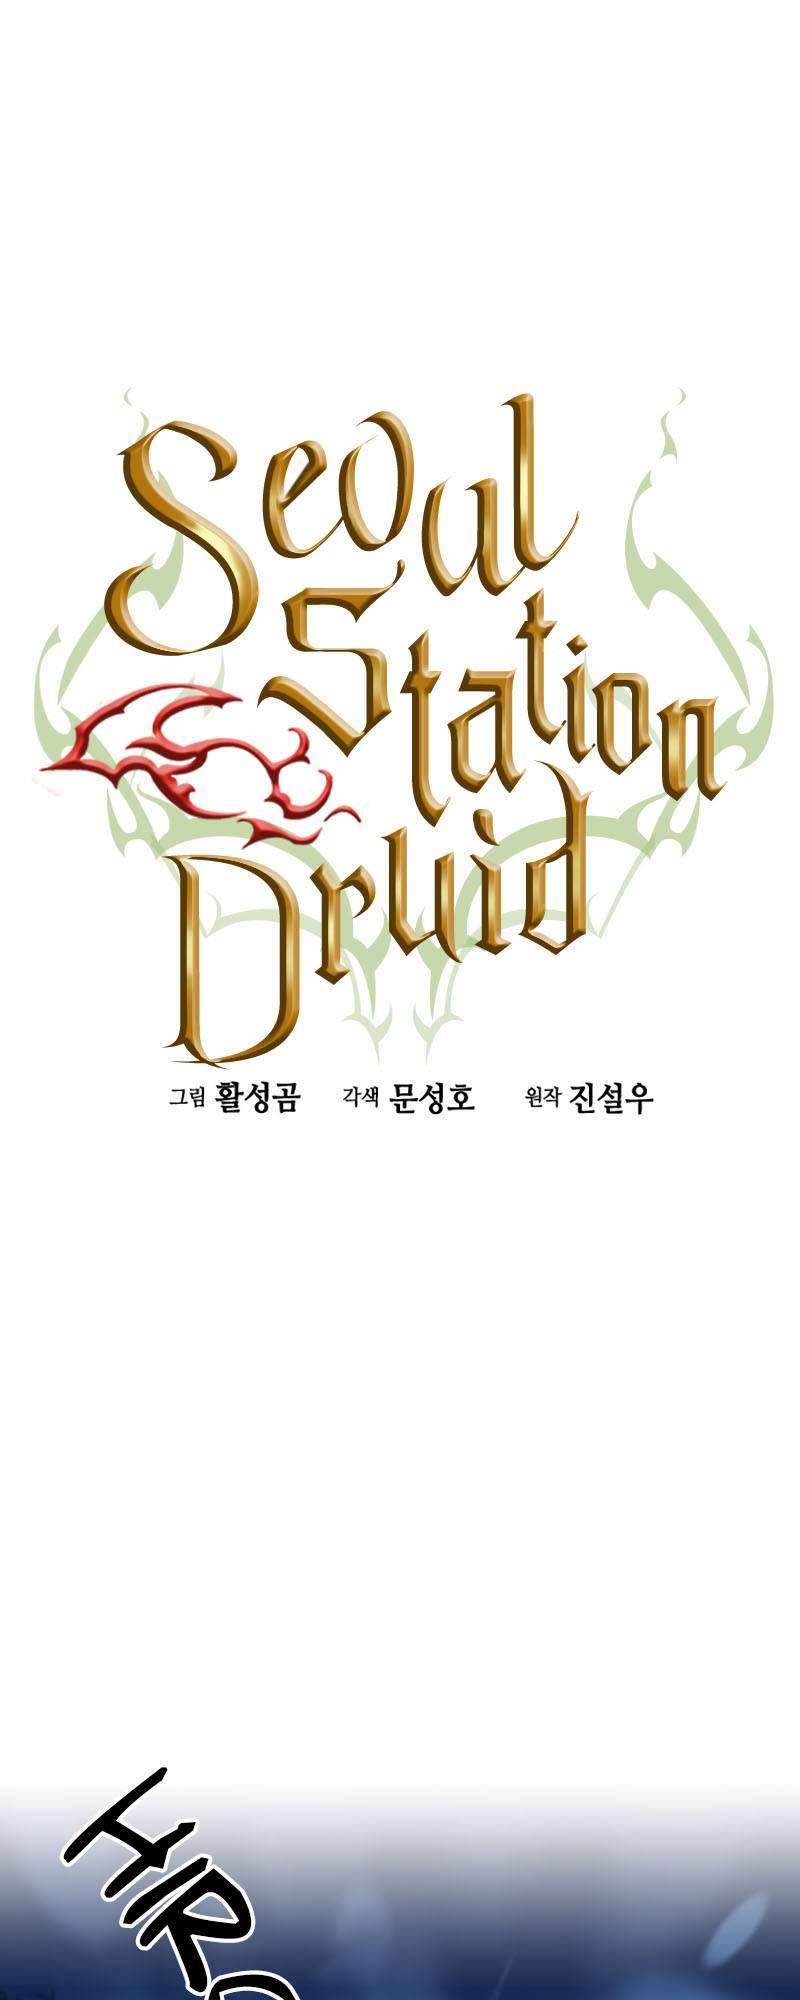 Seoul Station Druid - chapter 72 - #2